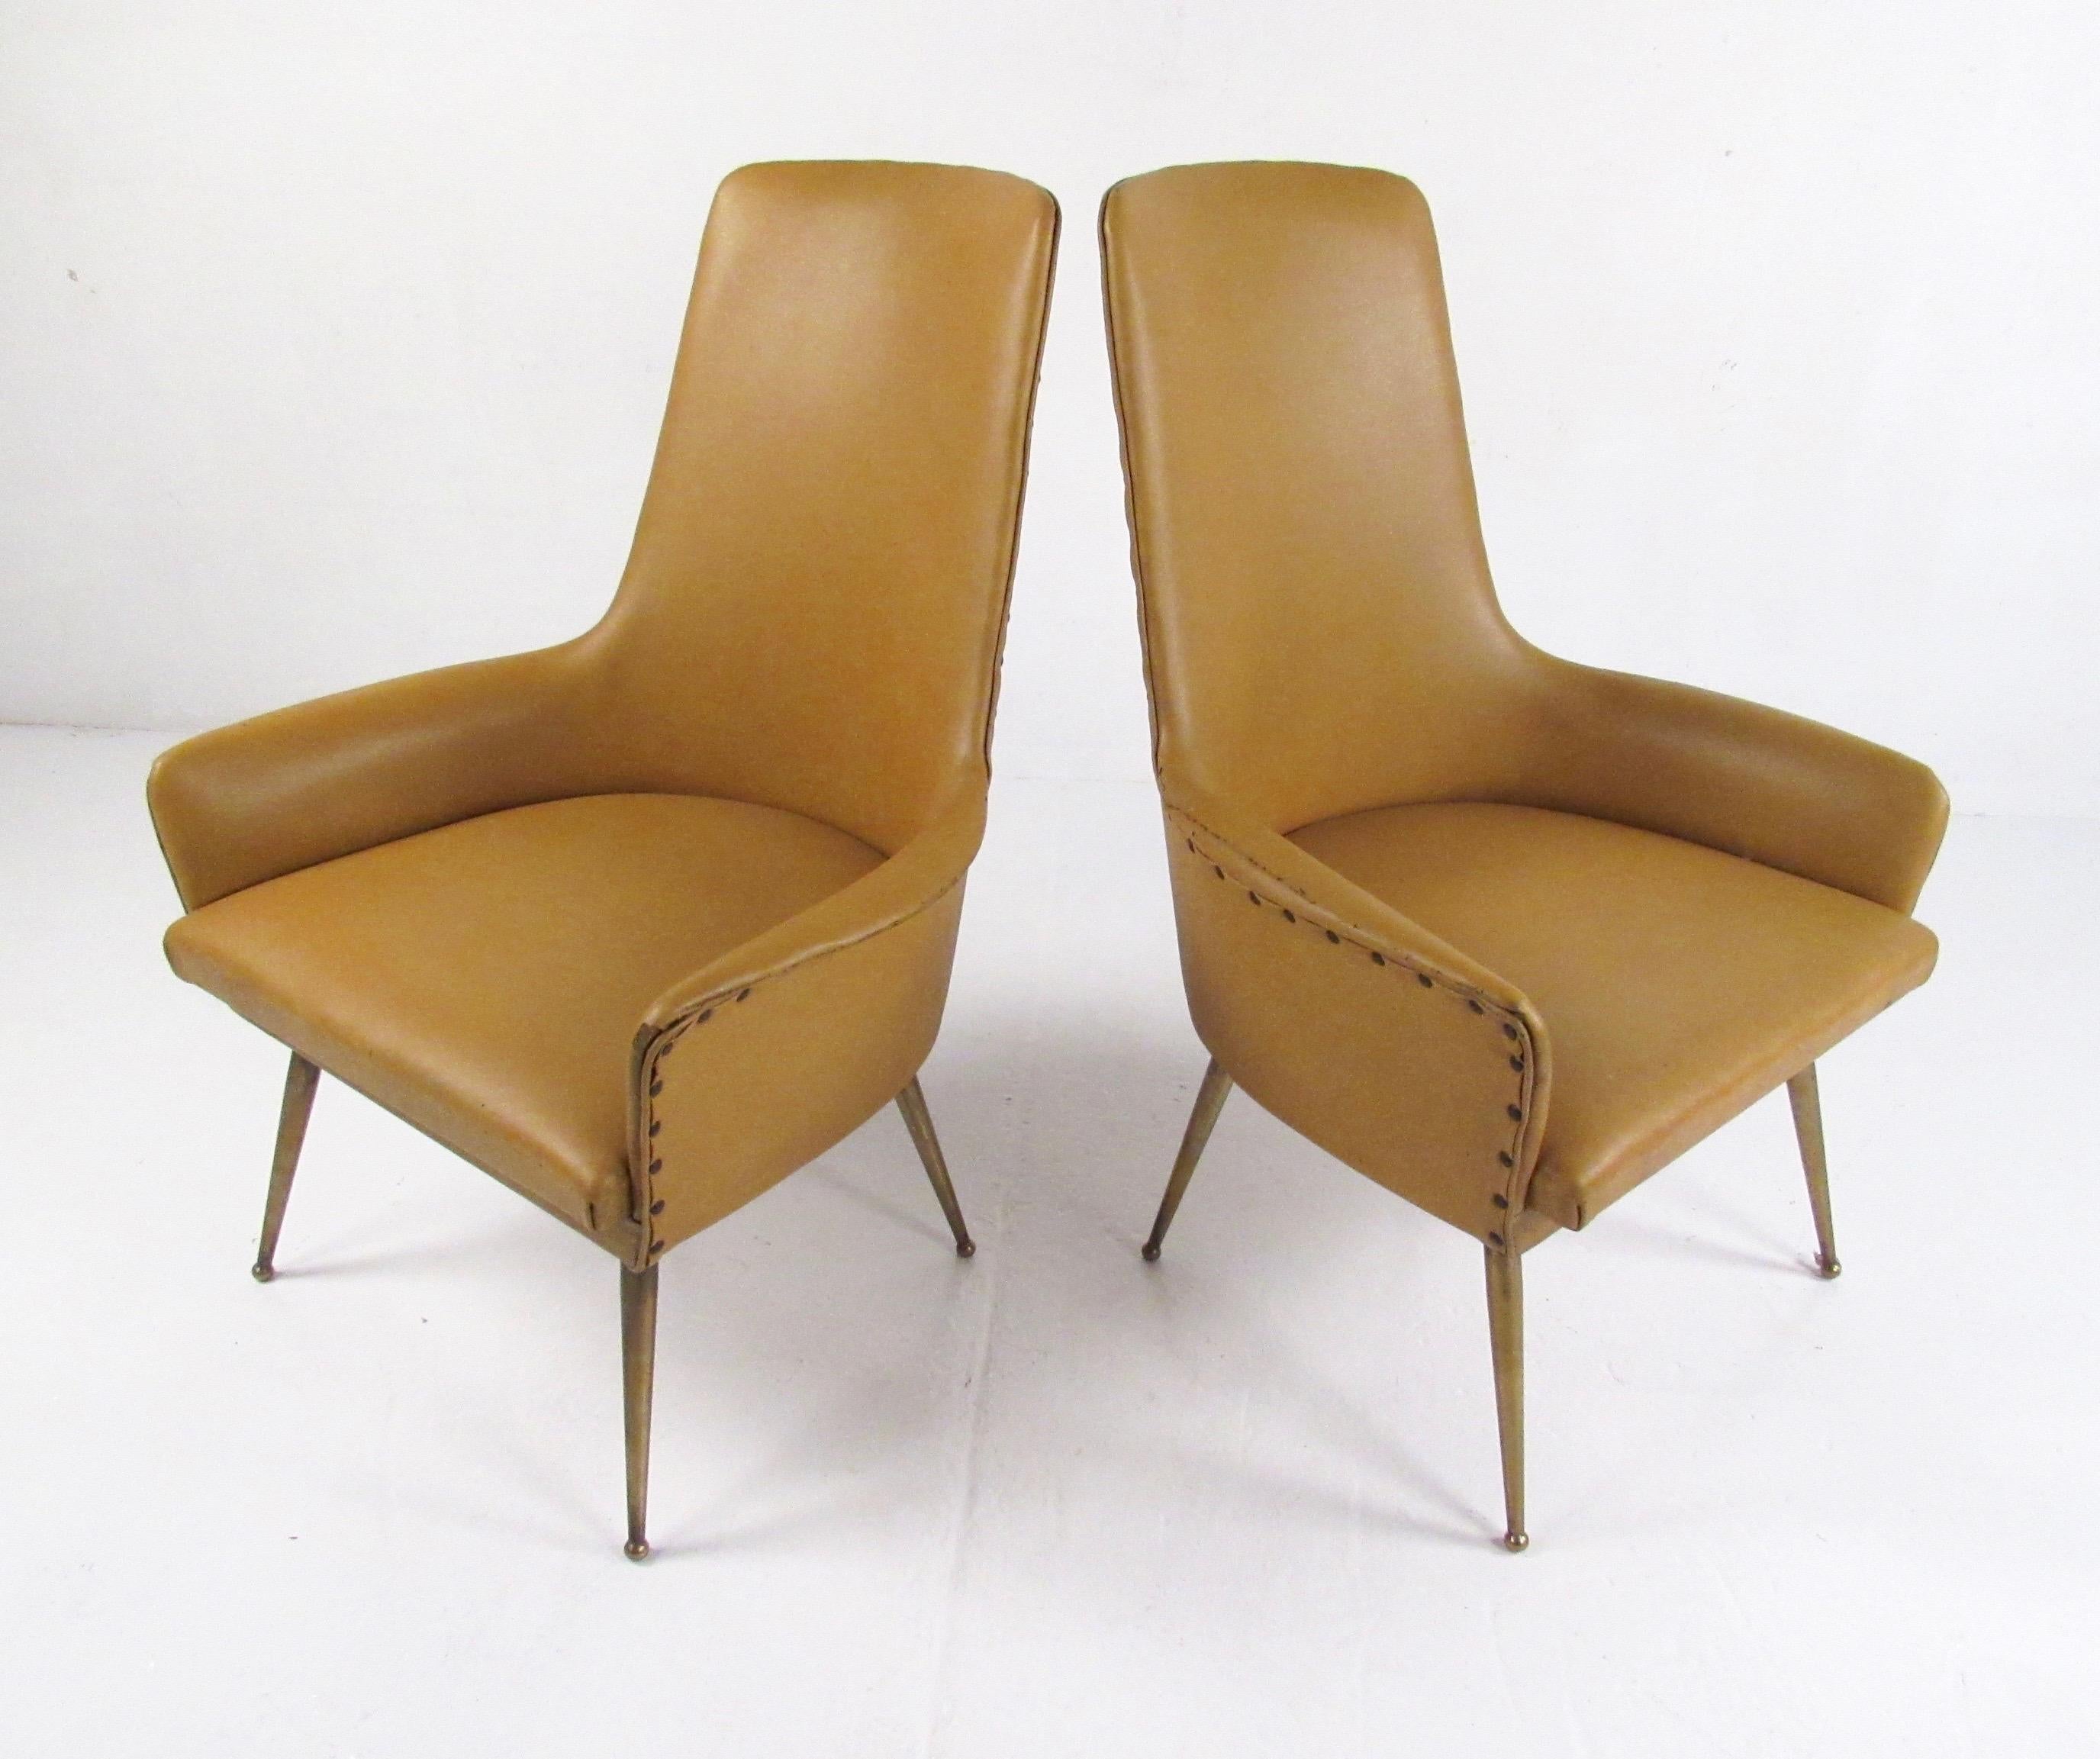 Mid-20th Century Pair of Italian Modern Side Chairs, circa 1950s